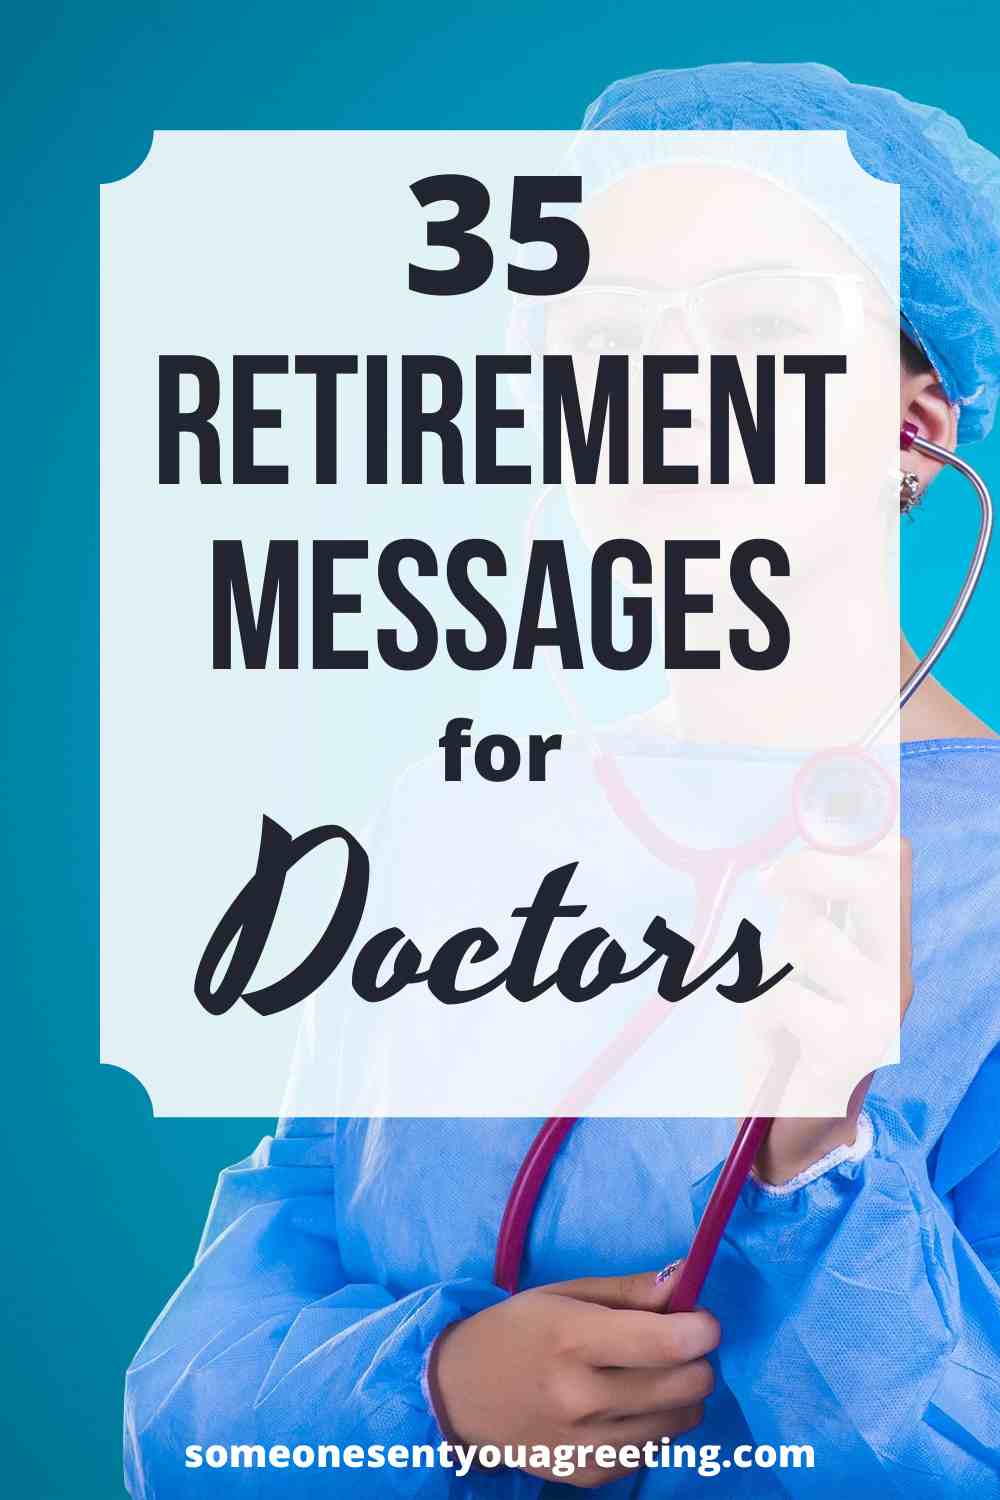 Retirement messages for doctors